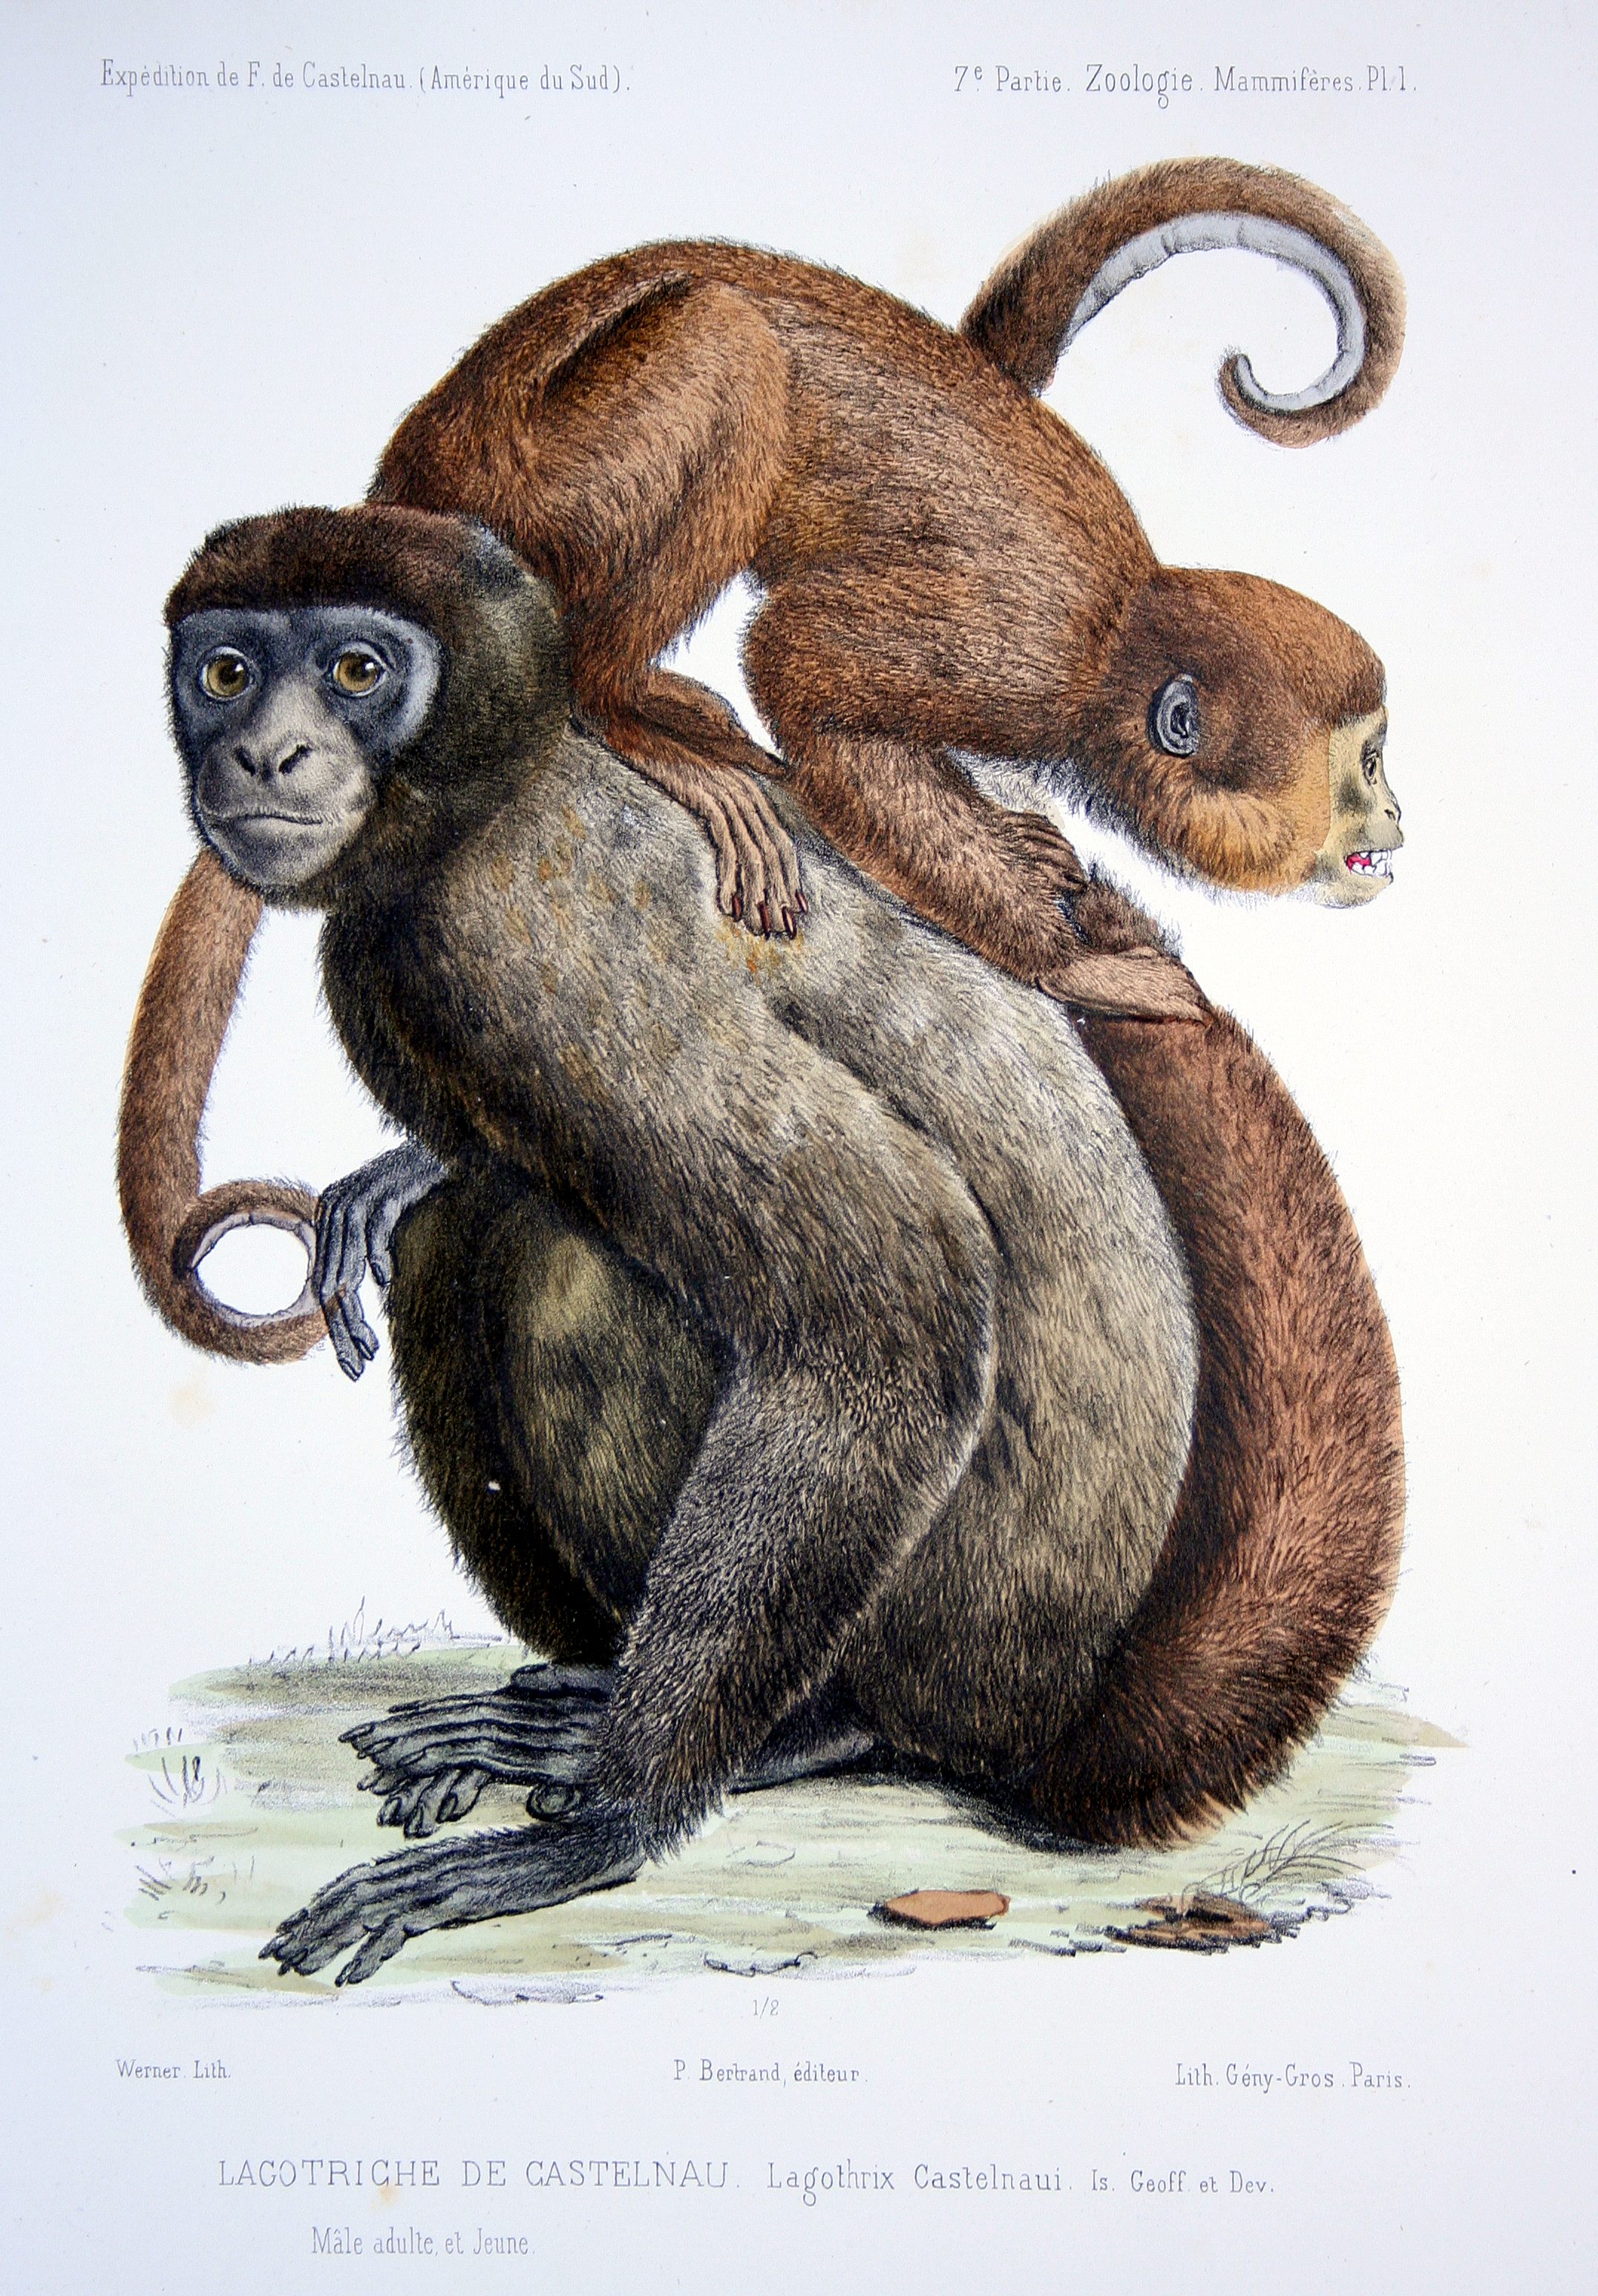 Poeppig's Woolly Monkey (Subspecies Lagothrix lagothricha poeppigii) ·  iNaturalist Guatemala